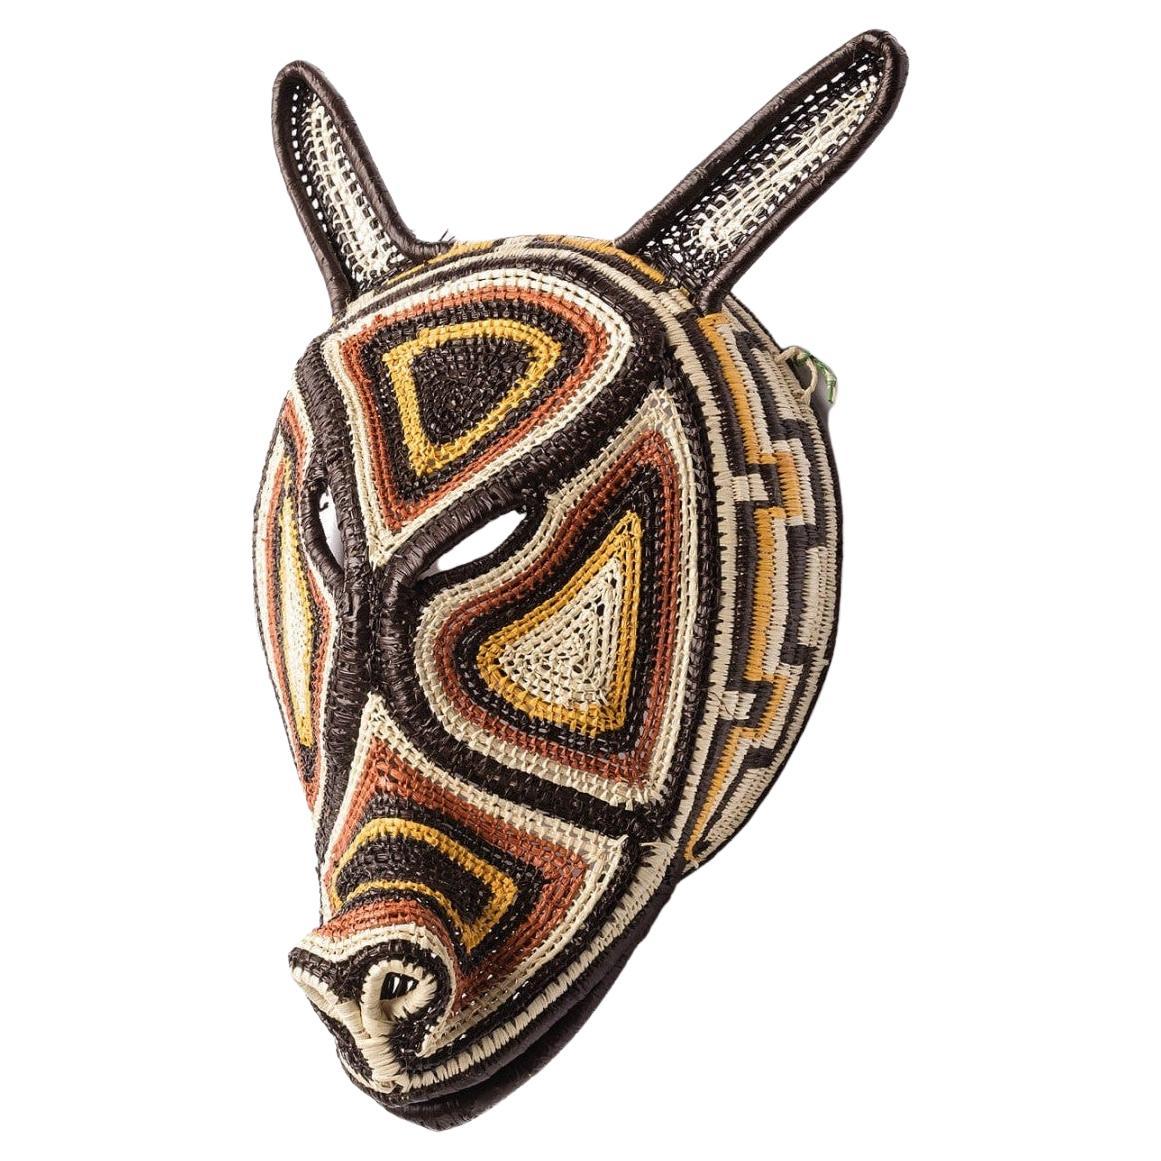 Decorative Hand-Woven Mask from Panama, Nemboro by Ethic&Tropic